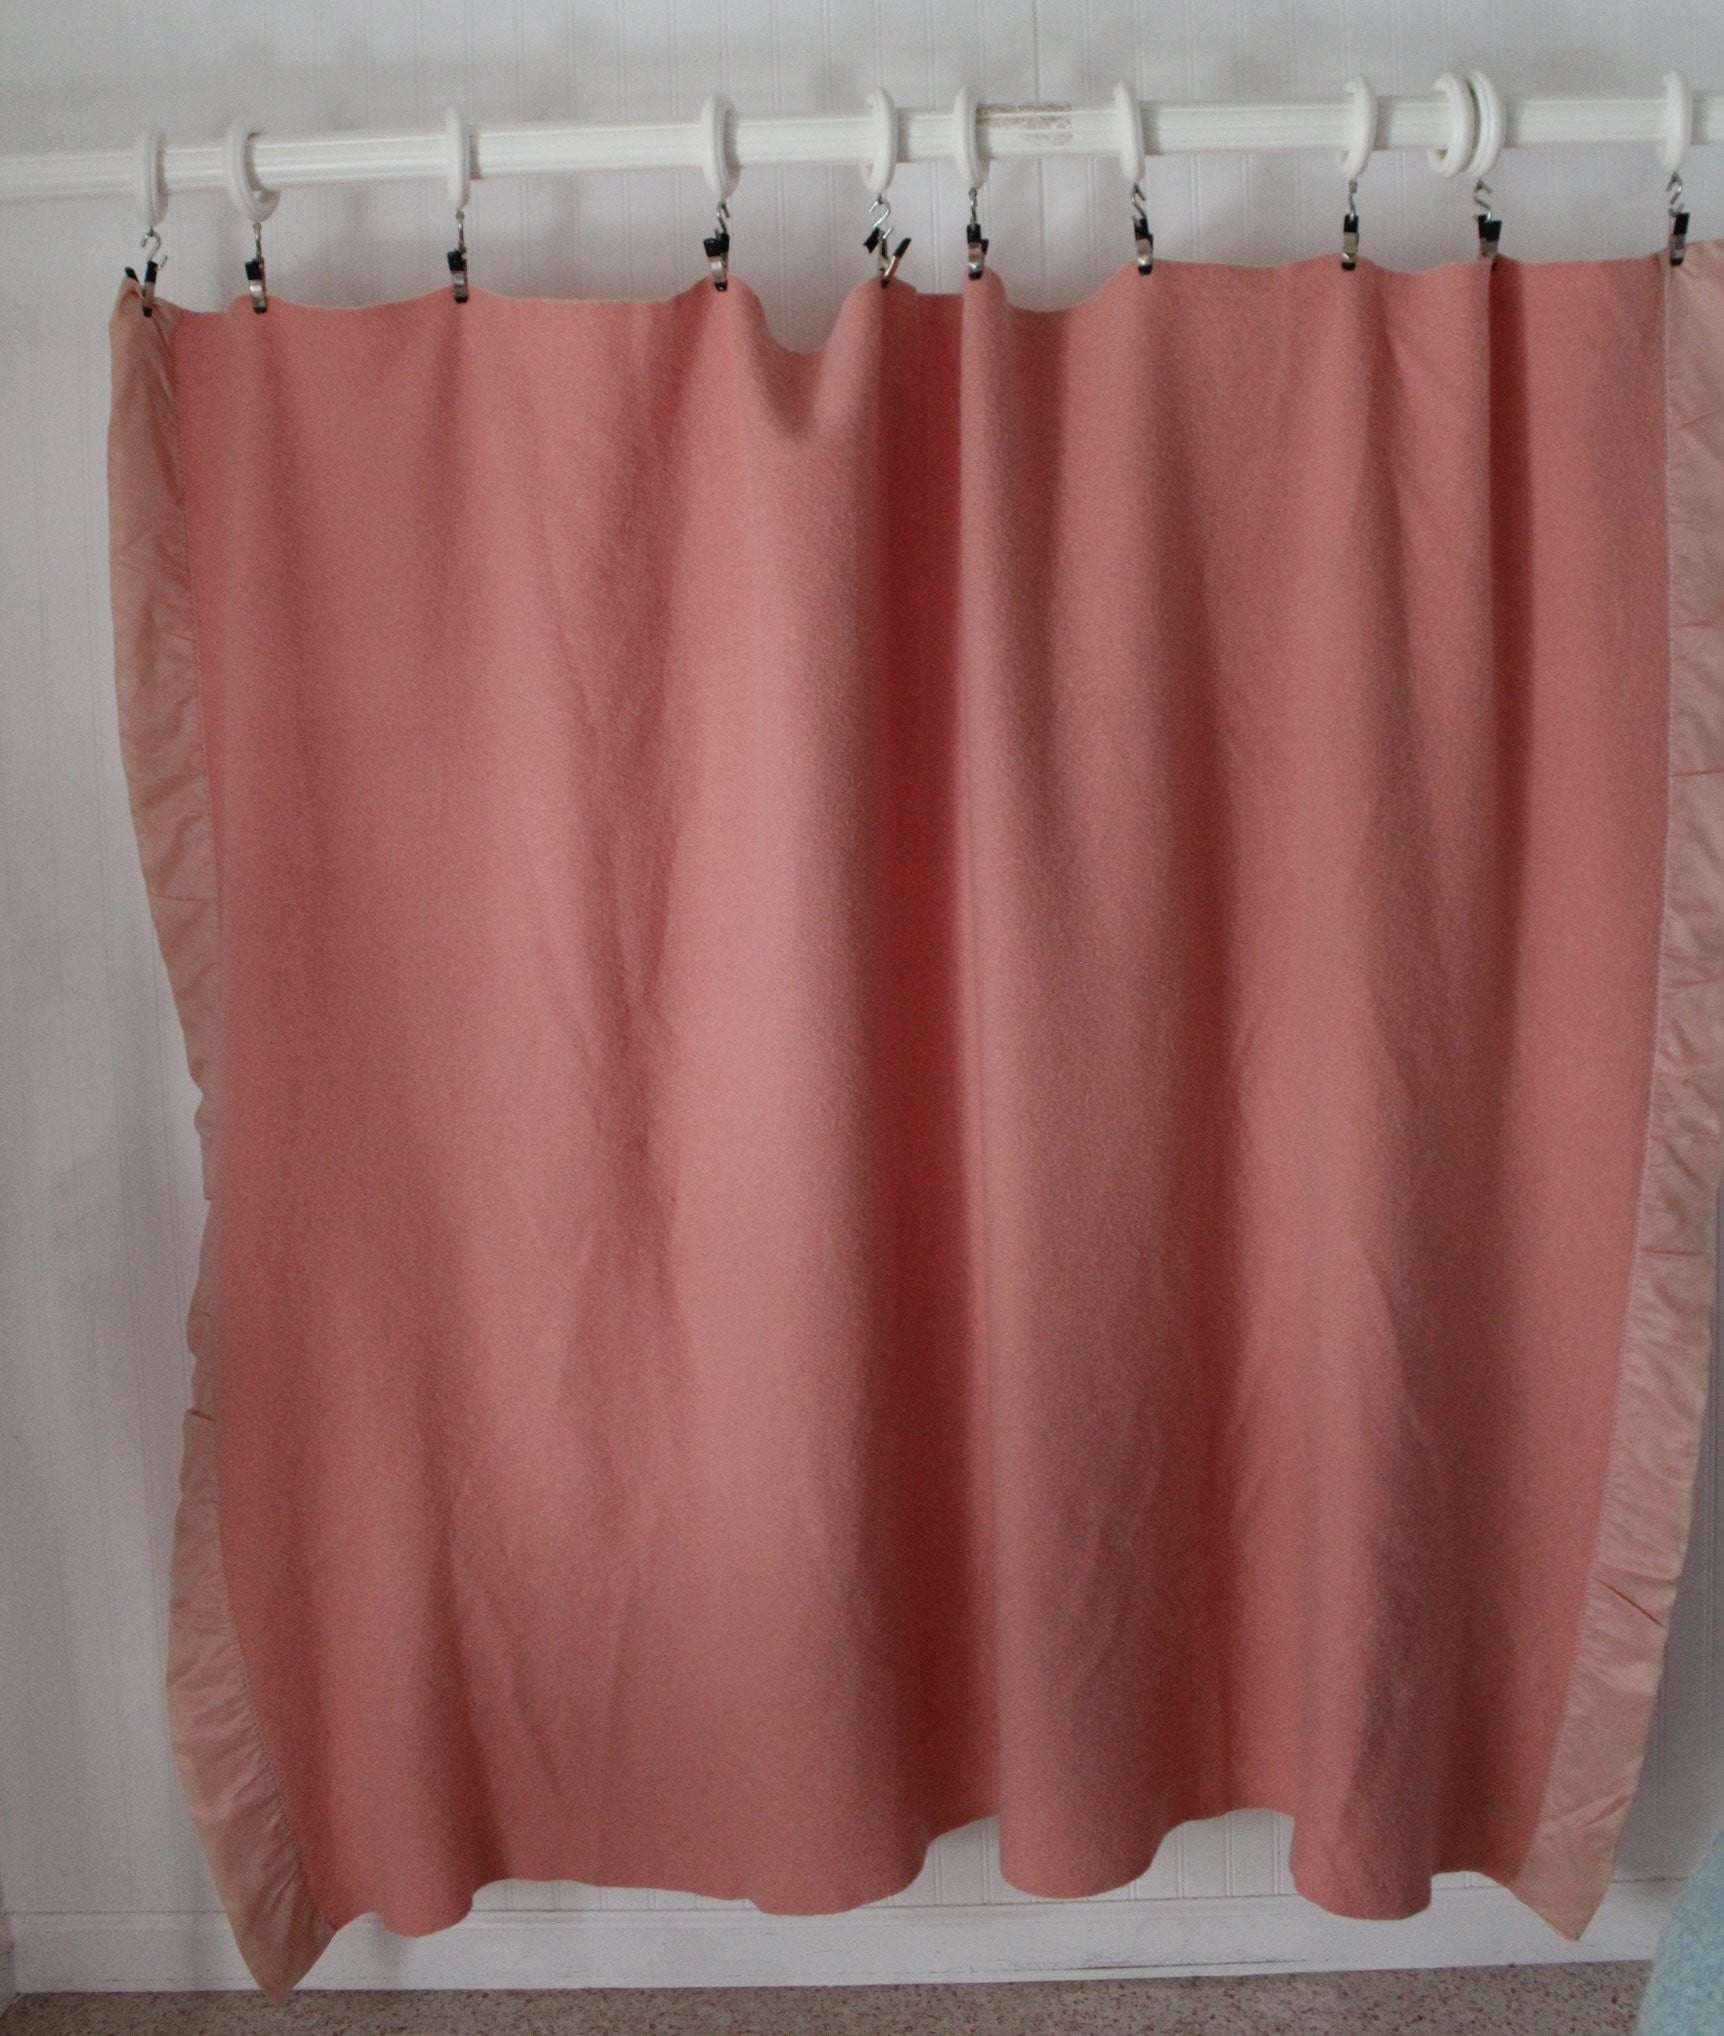 St Marys Ohio Wool Blanket Pink Pale Rose Vintage mid century